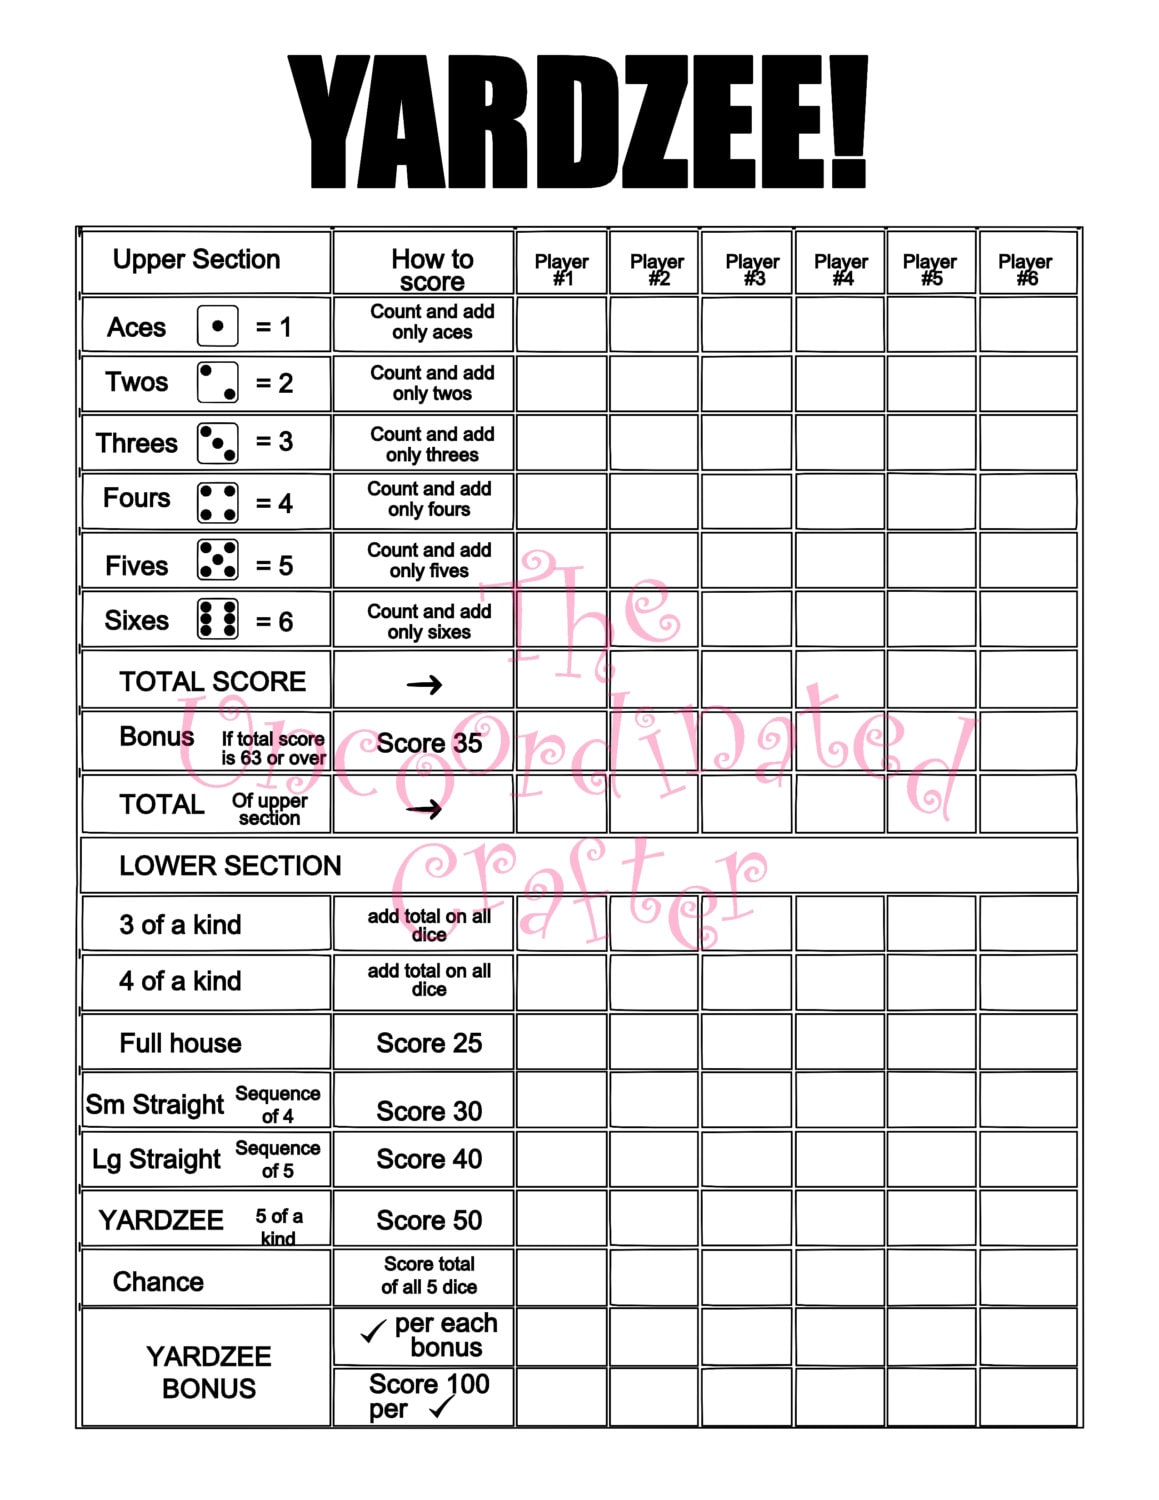 top-yardzee-score-card-printable-mason-website-yardzee-score-sheet-yahtzee-score-sheets